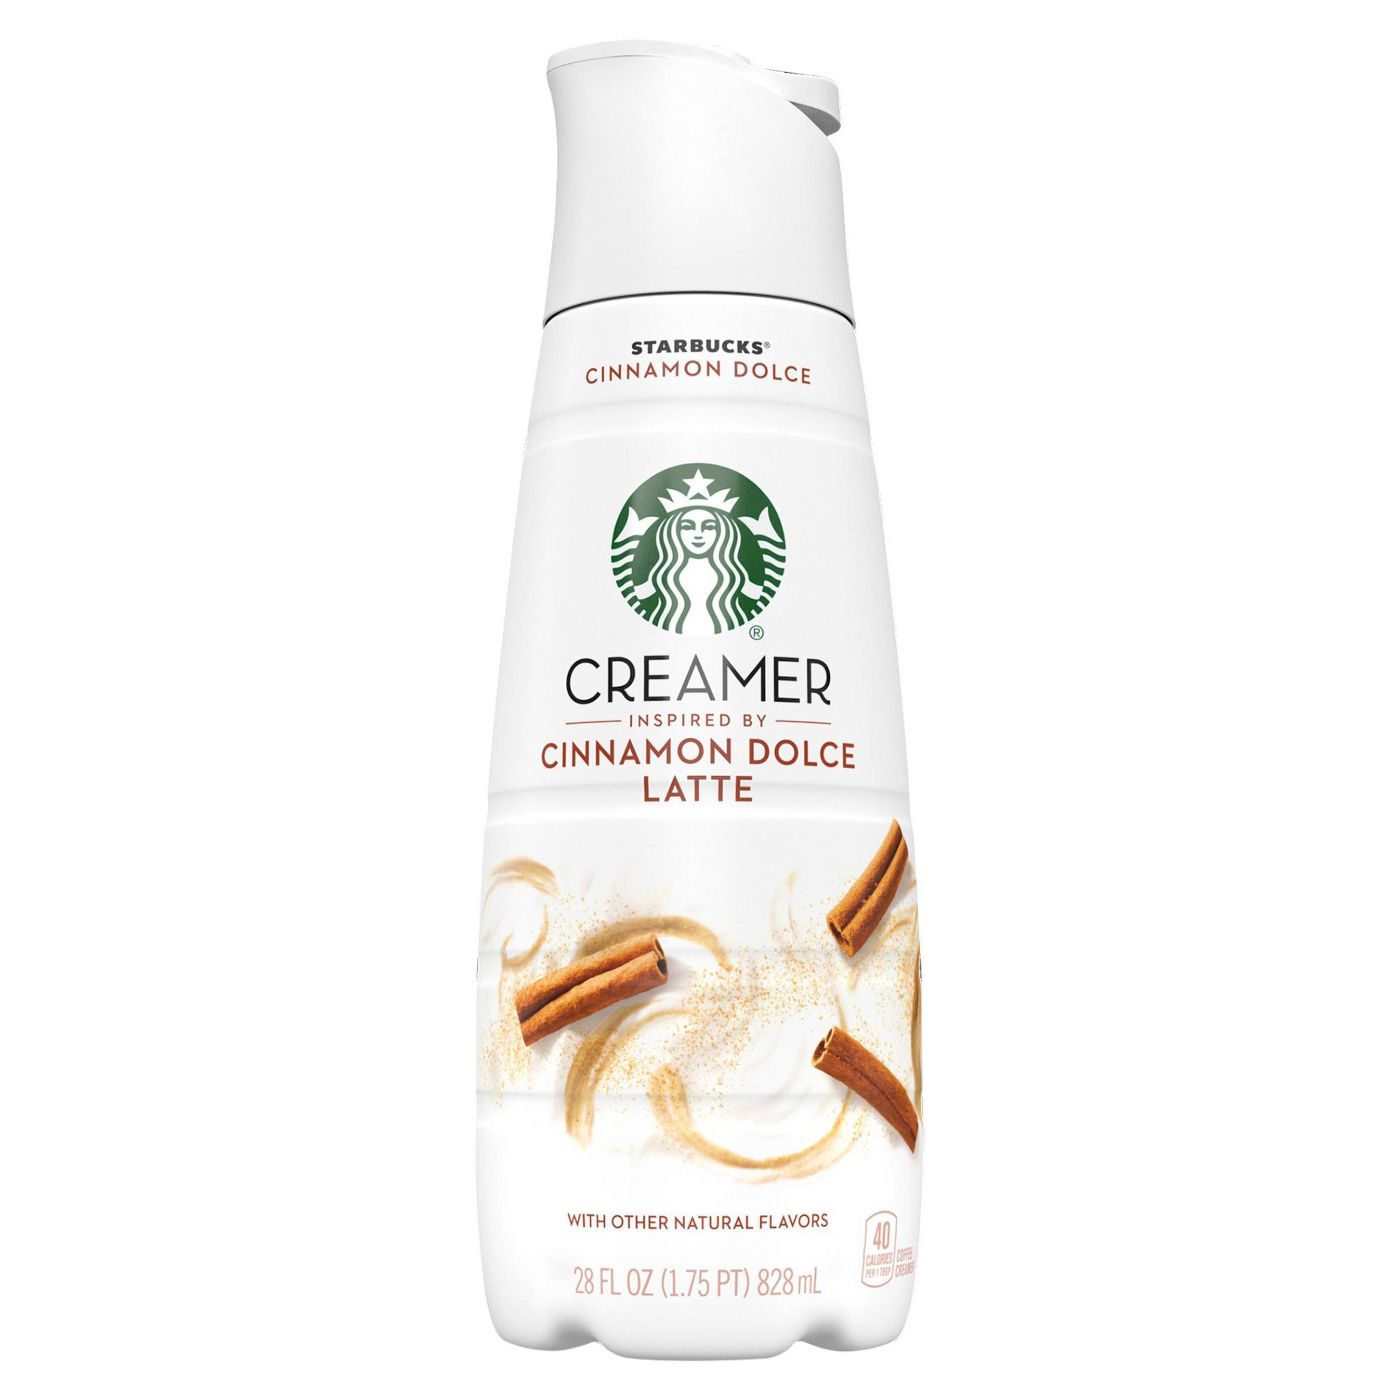 KEM SỮA LỎNG VỊ QUẾ Starbucks Cinnamon Dolce Creamer, 828ml 28 oz